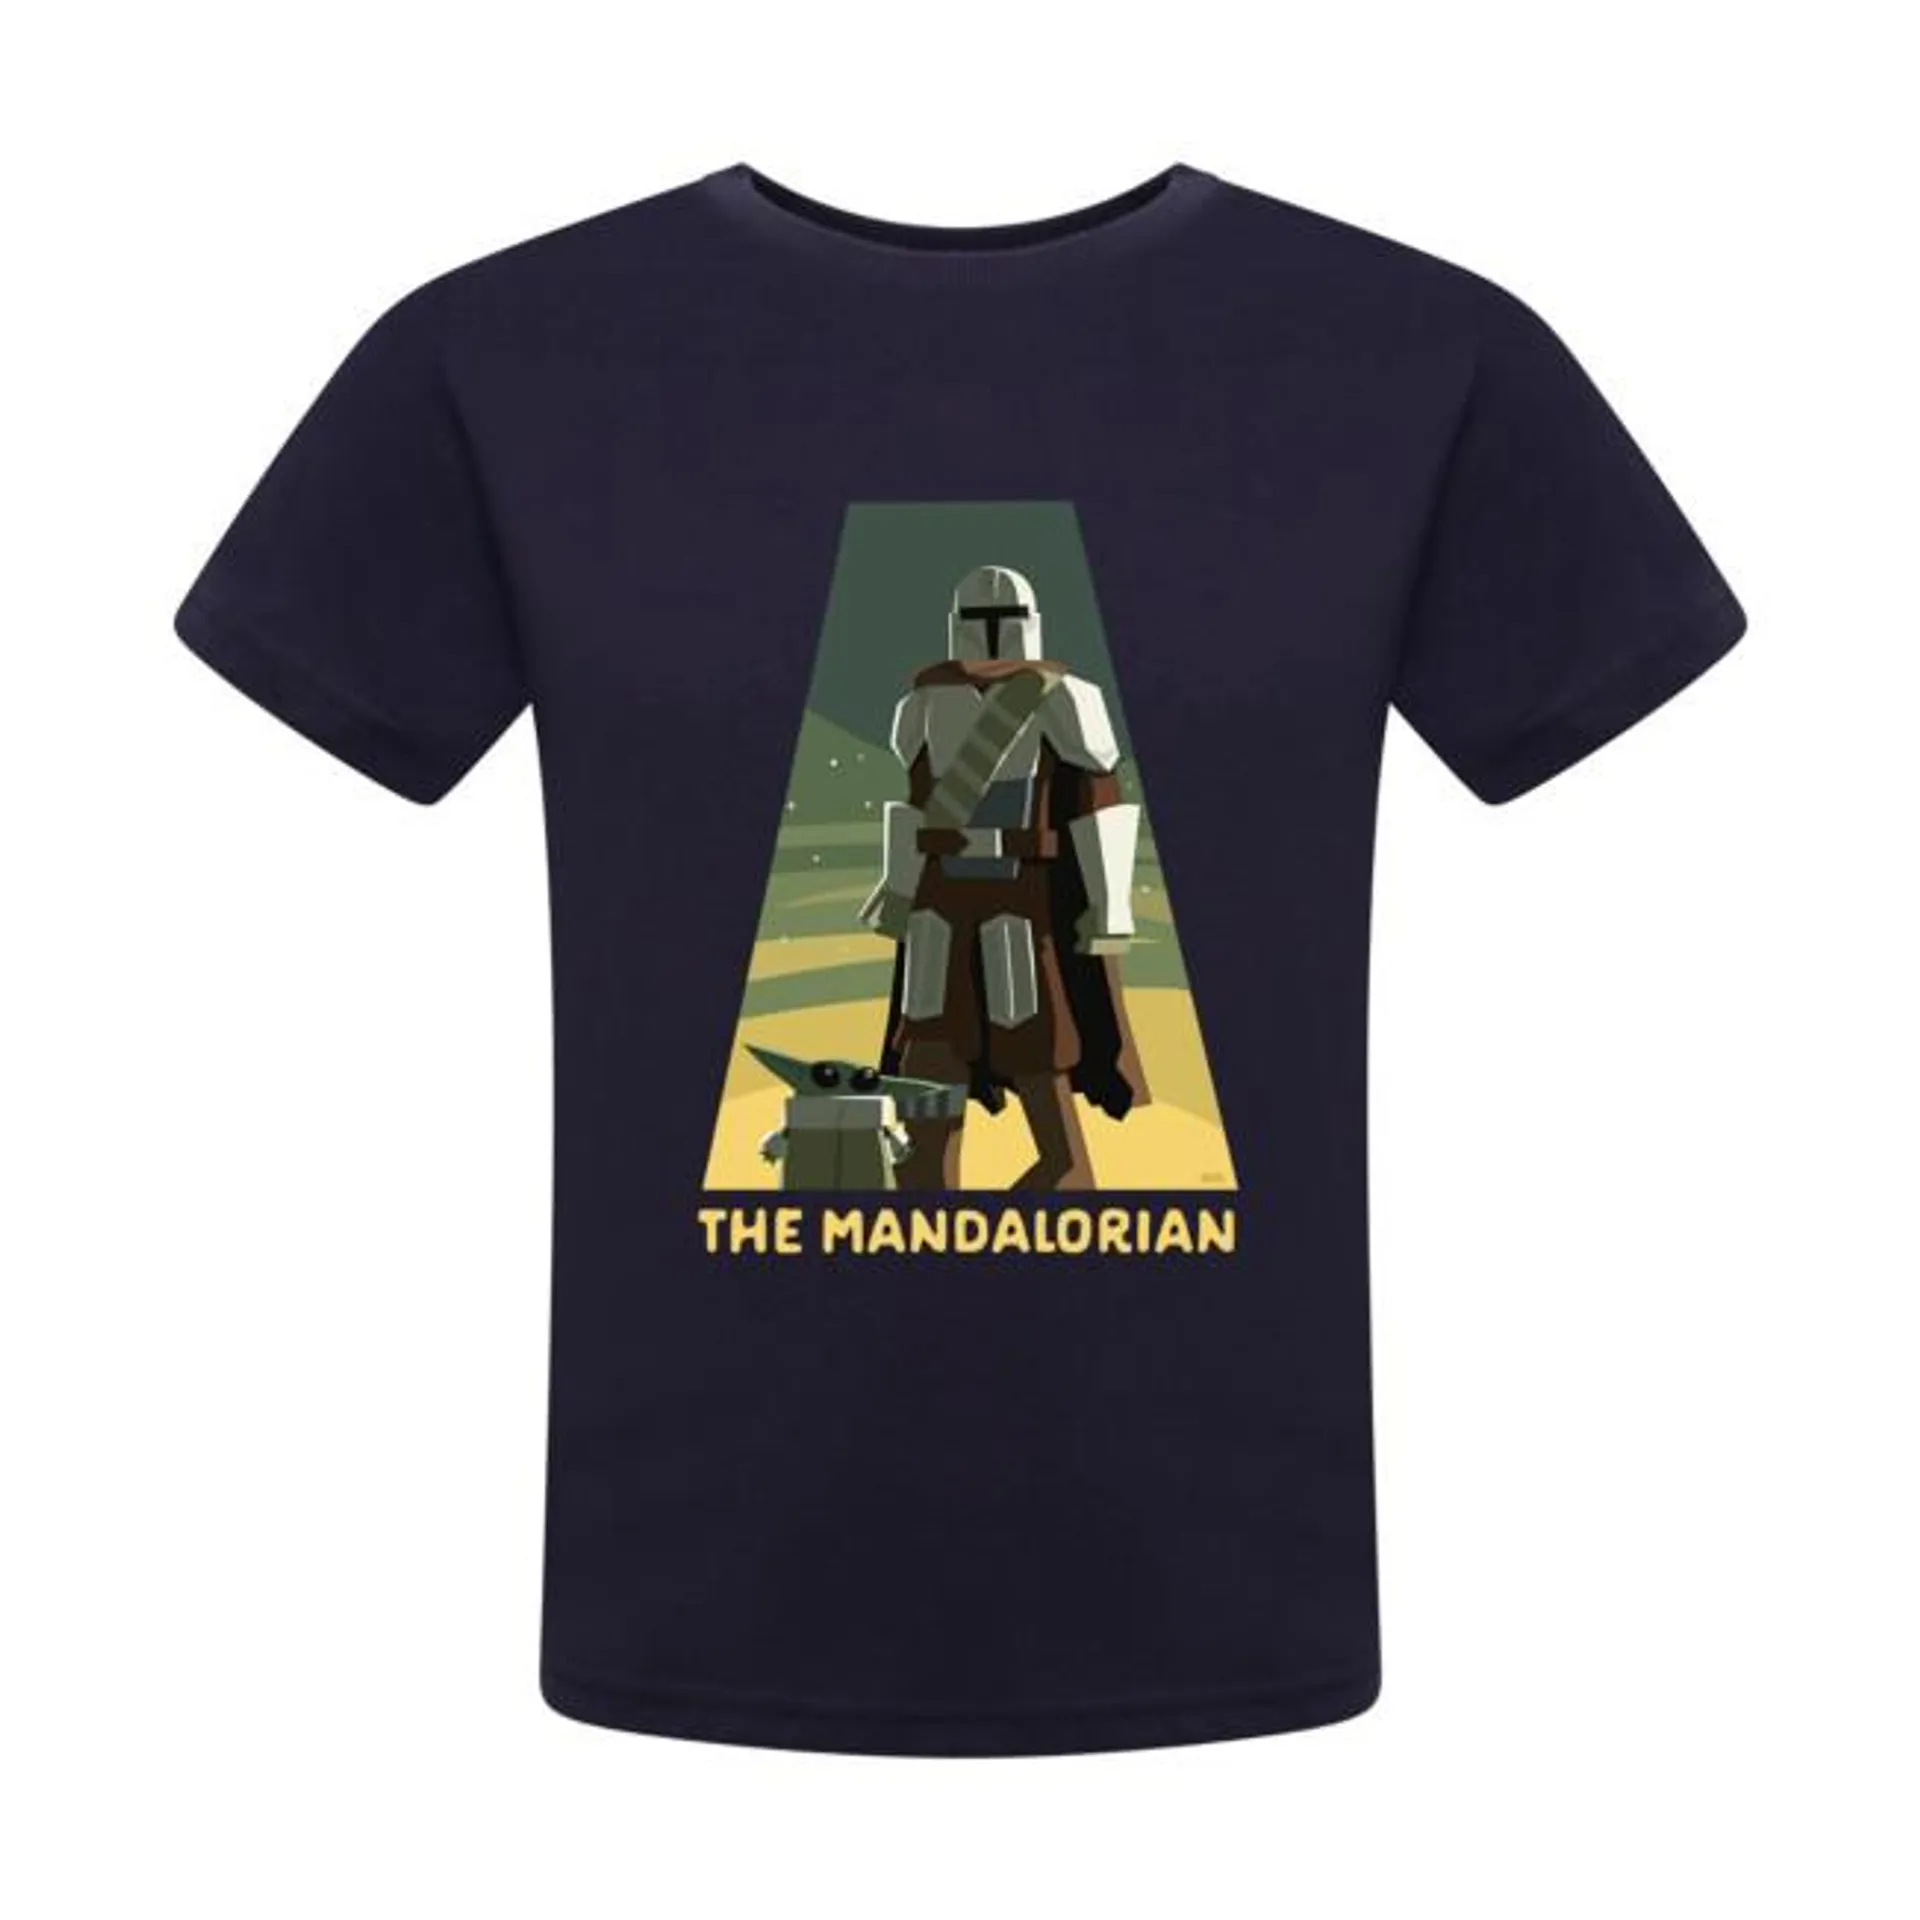 The Mandalorian and Grogu Customisable T-Shirt For Kids, Star Wars